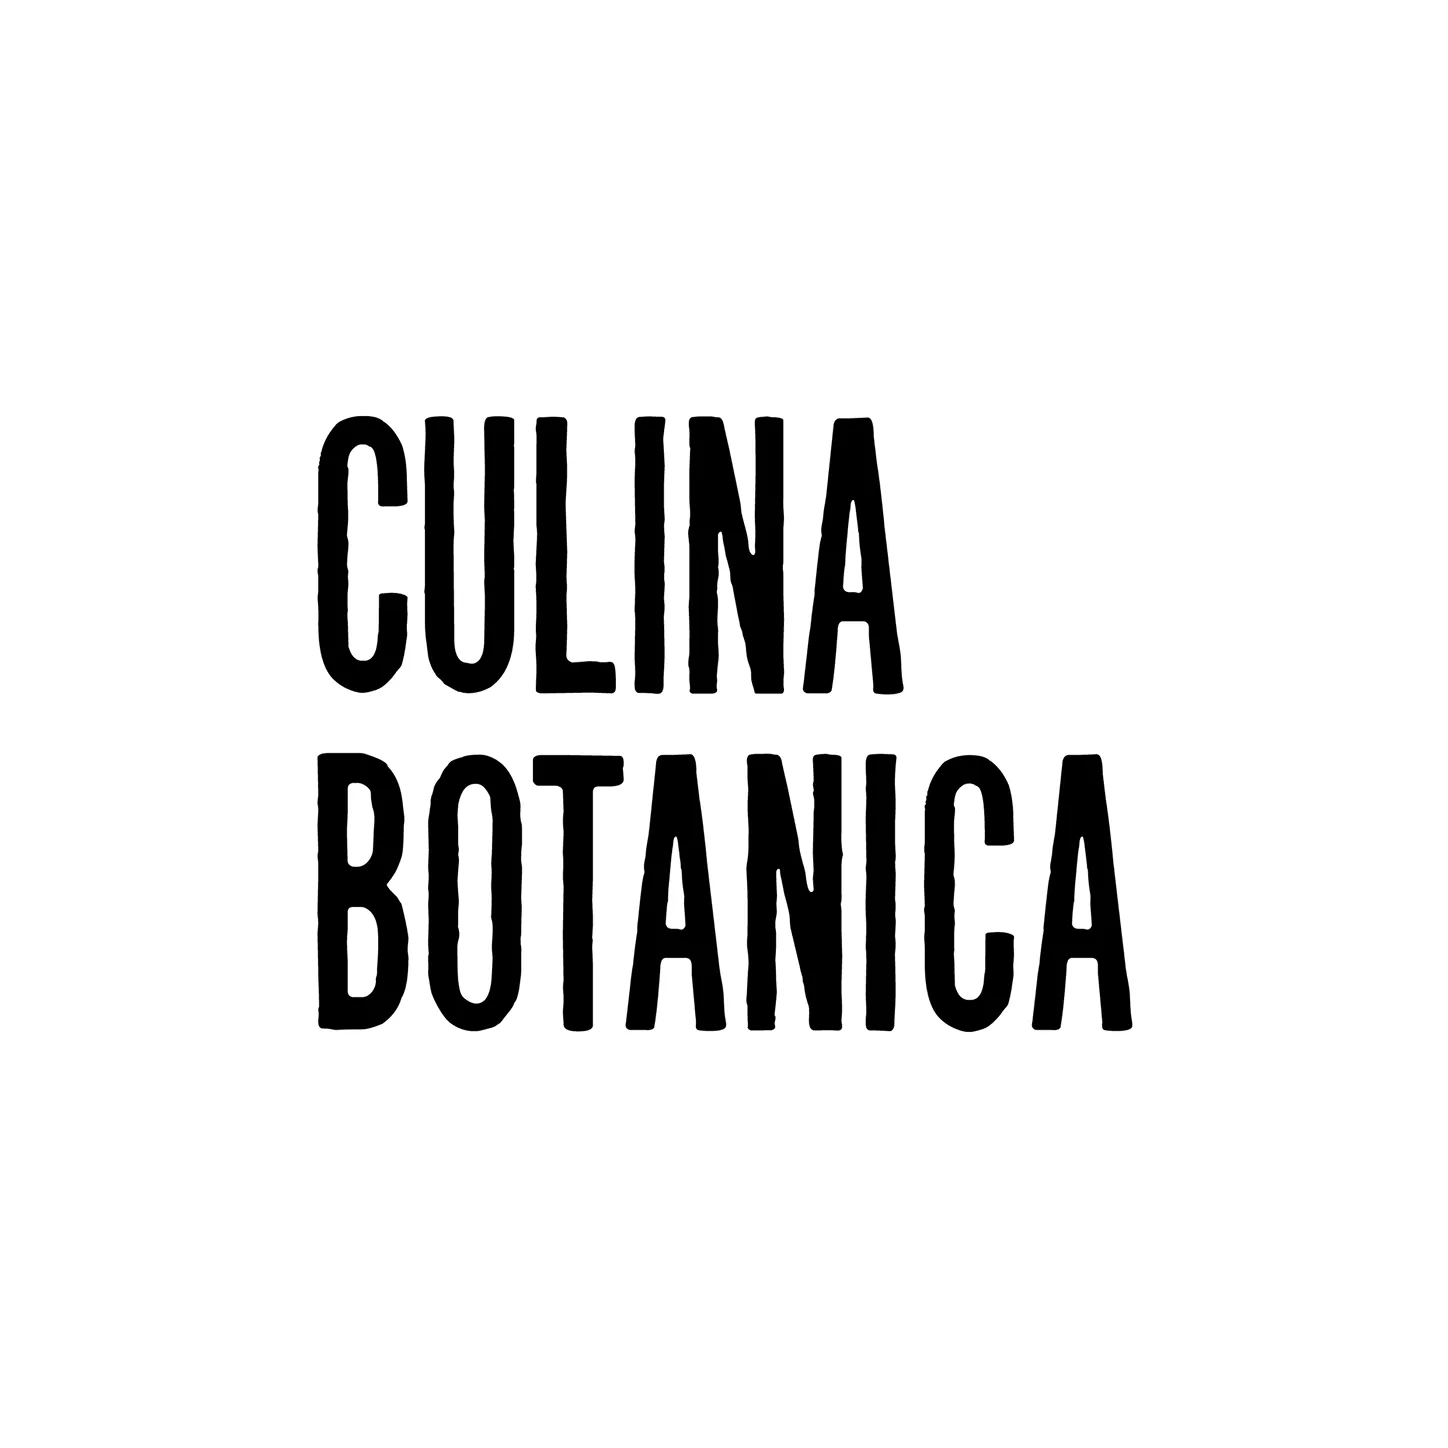 culinabotanica.cz